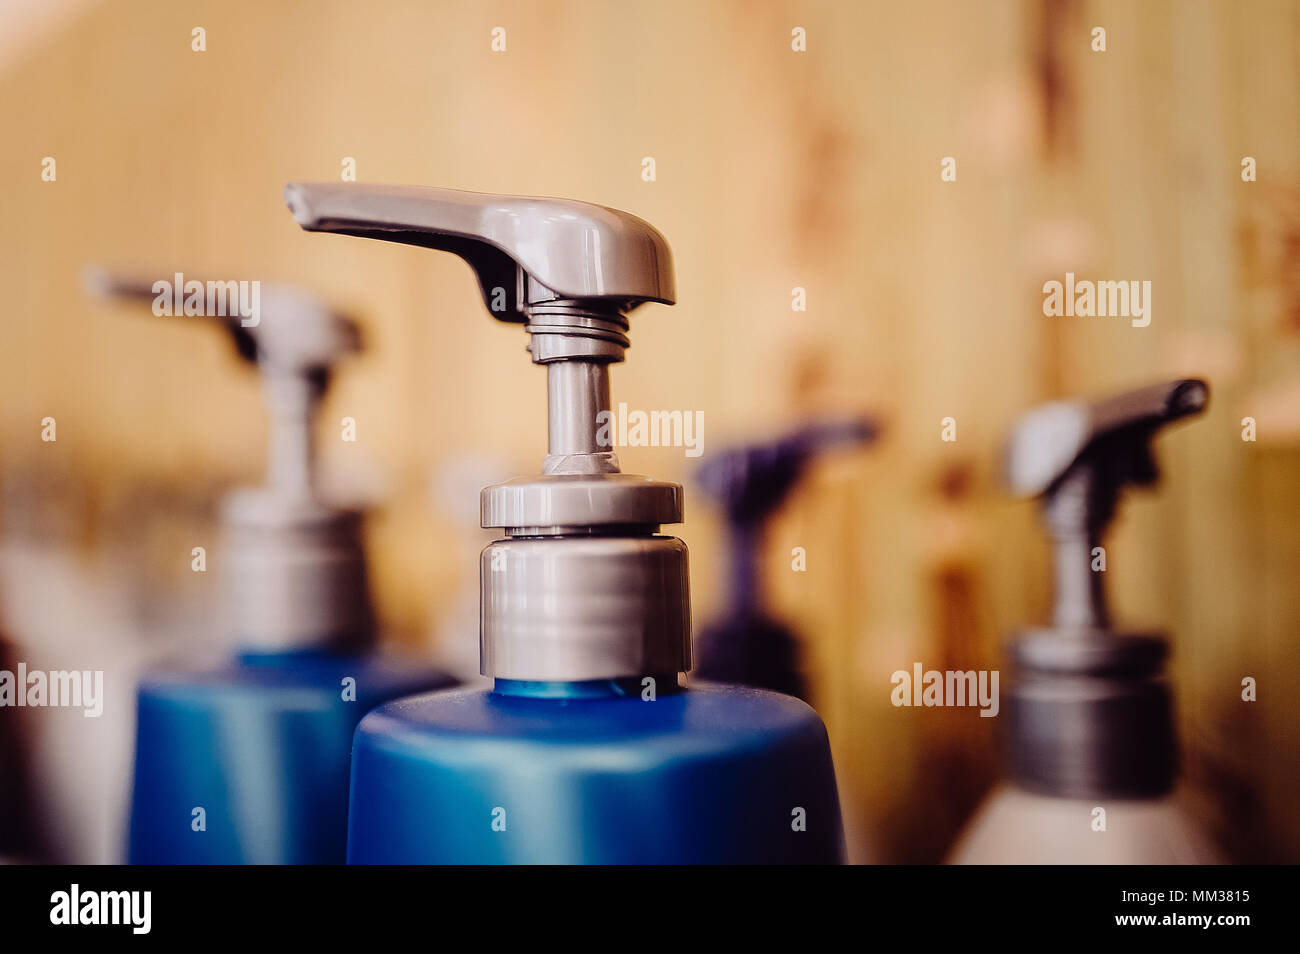 Bottle of liquid soap, shower gel or shampoo. Toned image. Shampoo bottle with dispenser Stock Photo